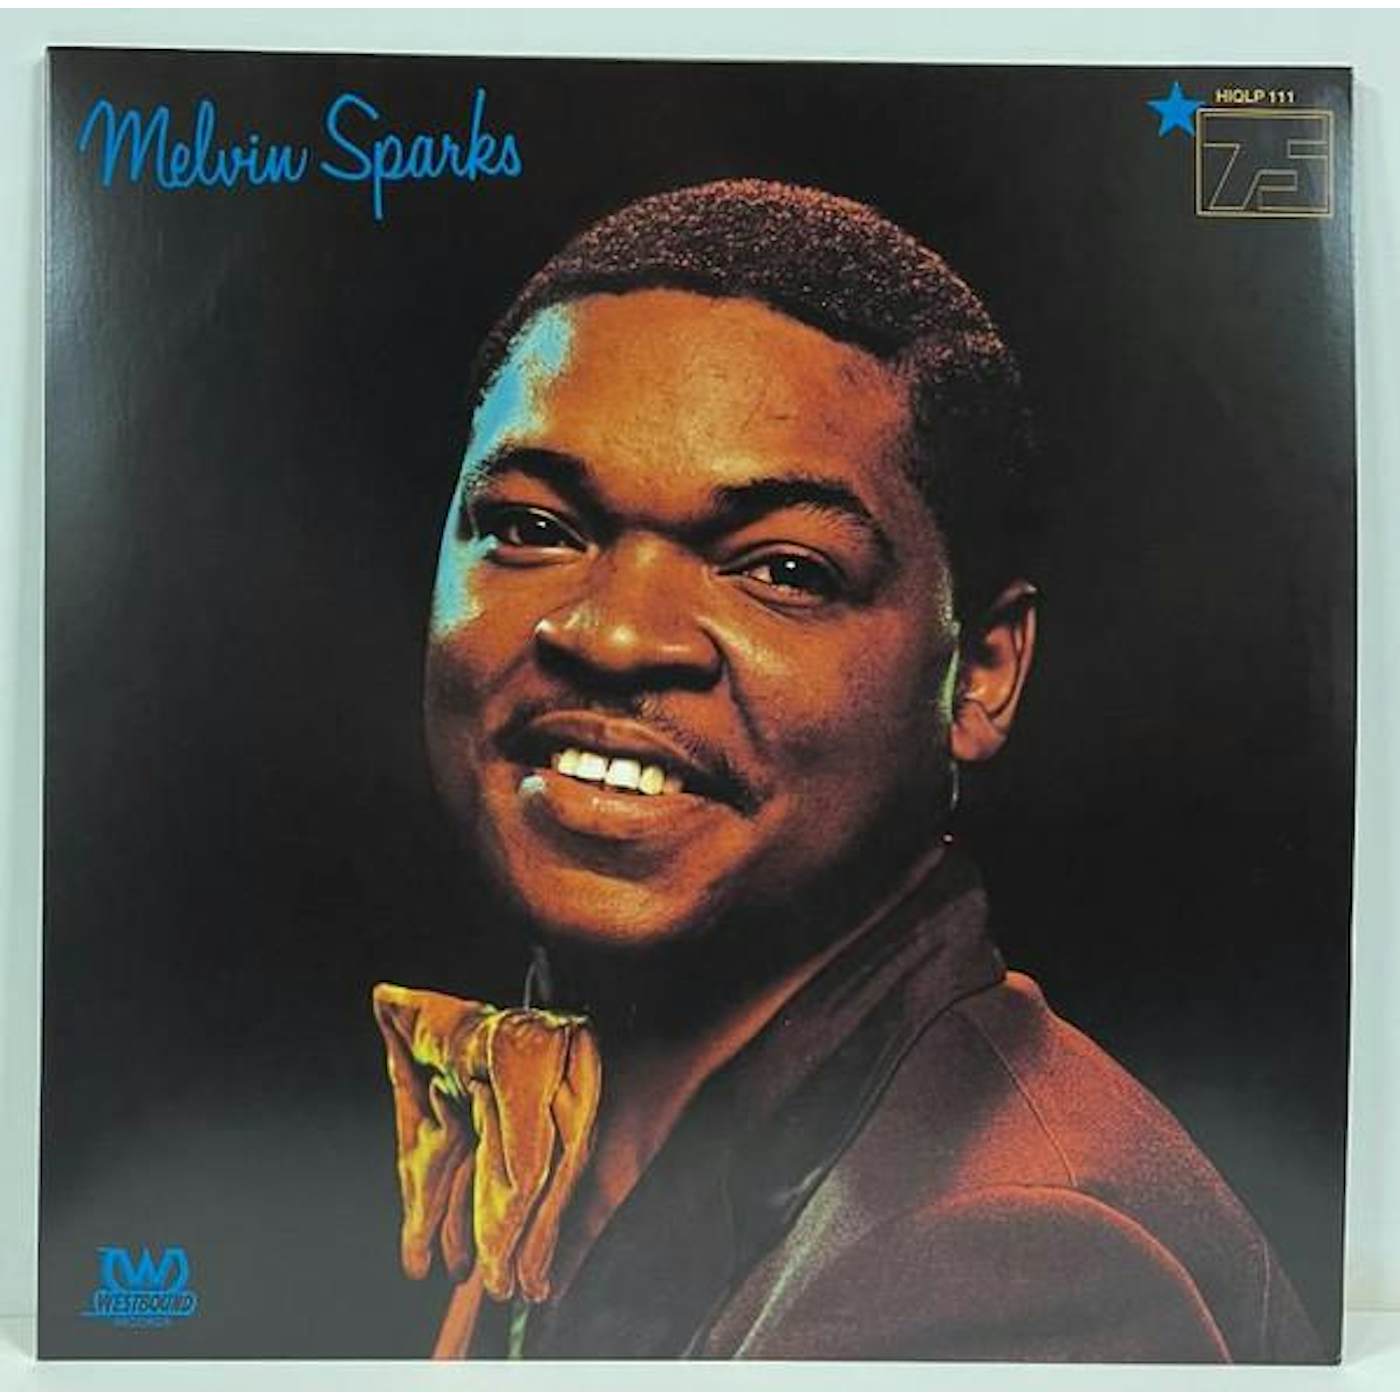 Melvin Sparks 75 Vinyl Record